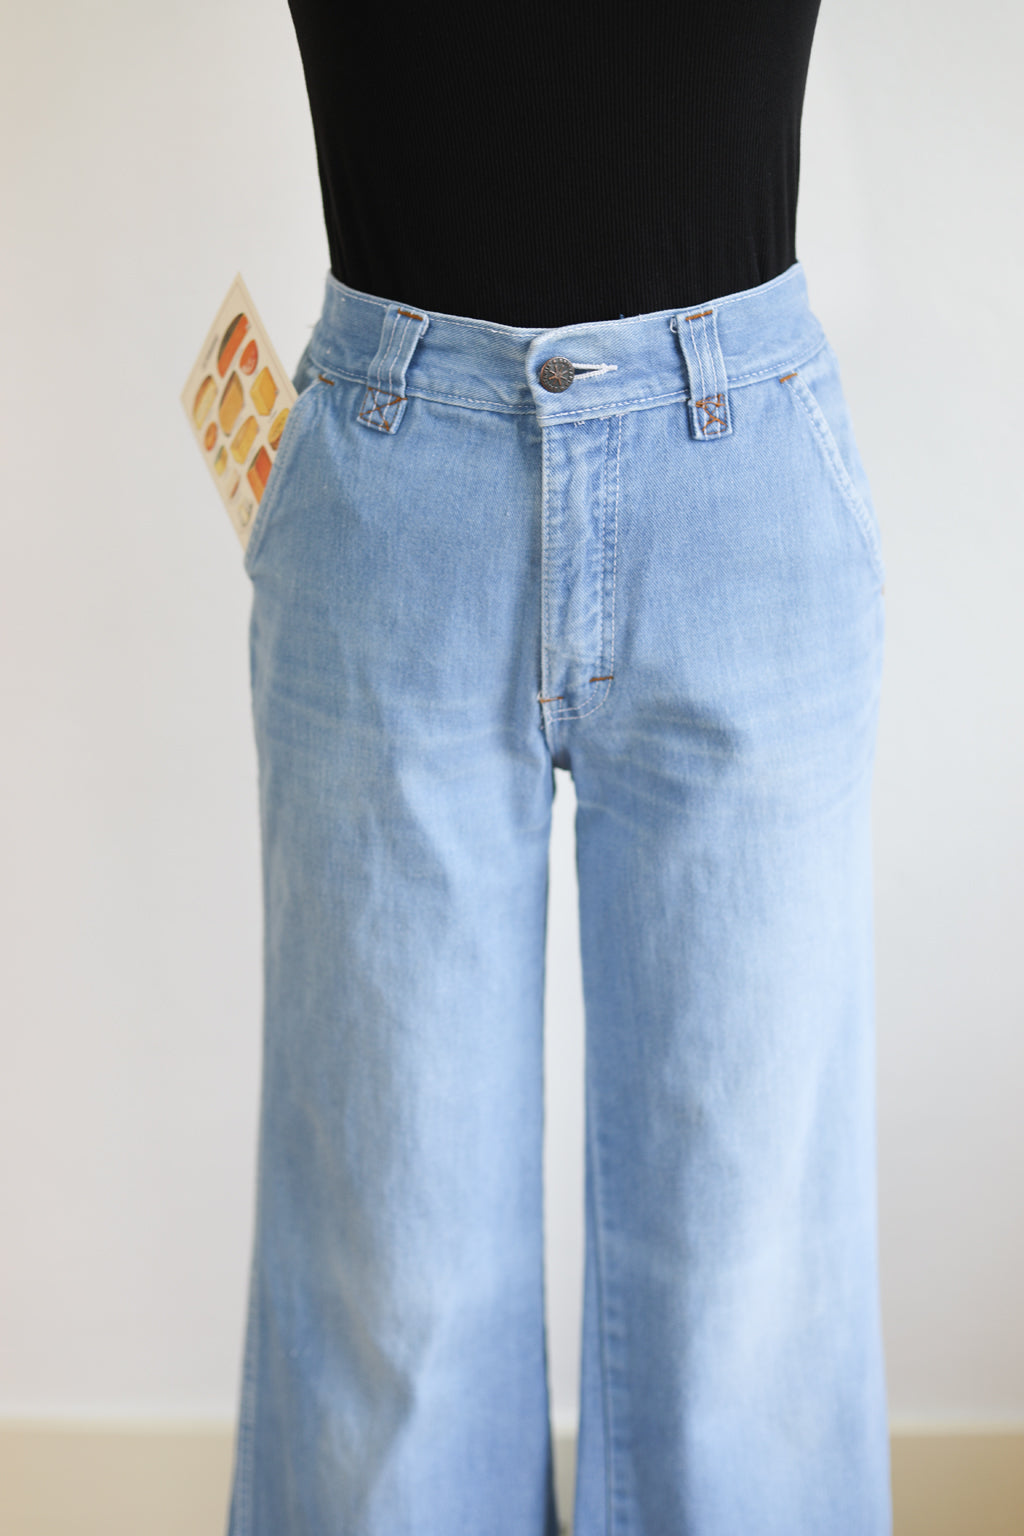 Vintage 1970s Light Wash Denim BRITANNIA Flares Jeans - THE BEST Mega Bell Bottoms W30"